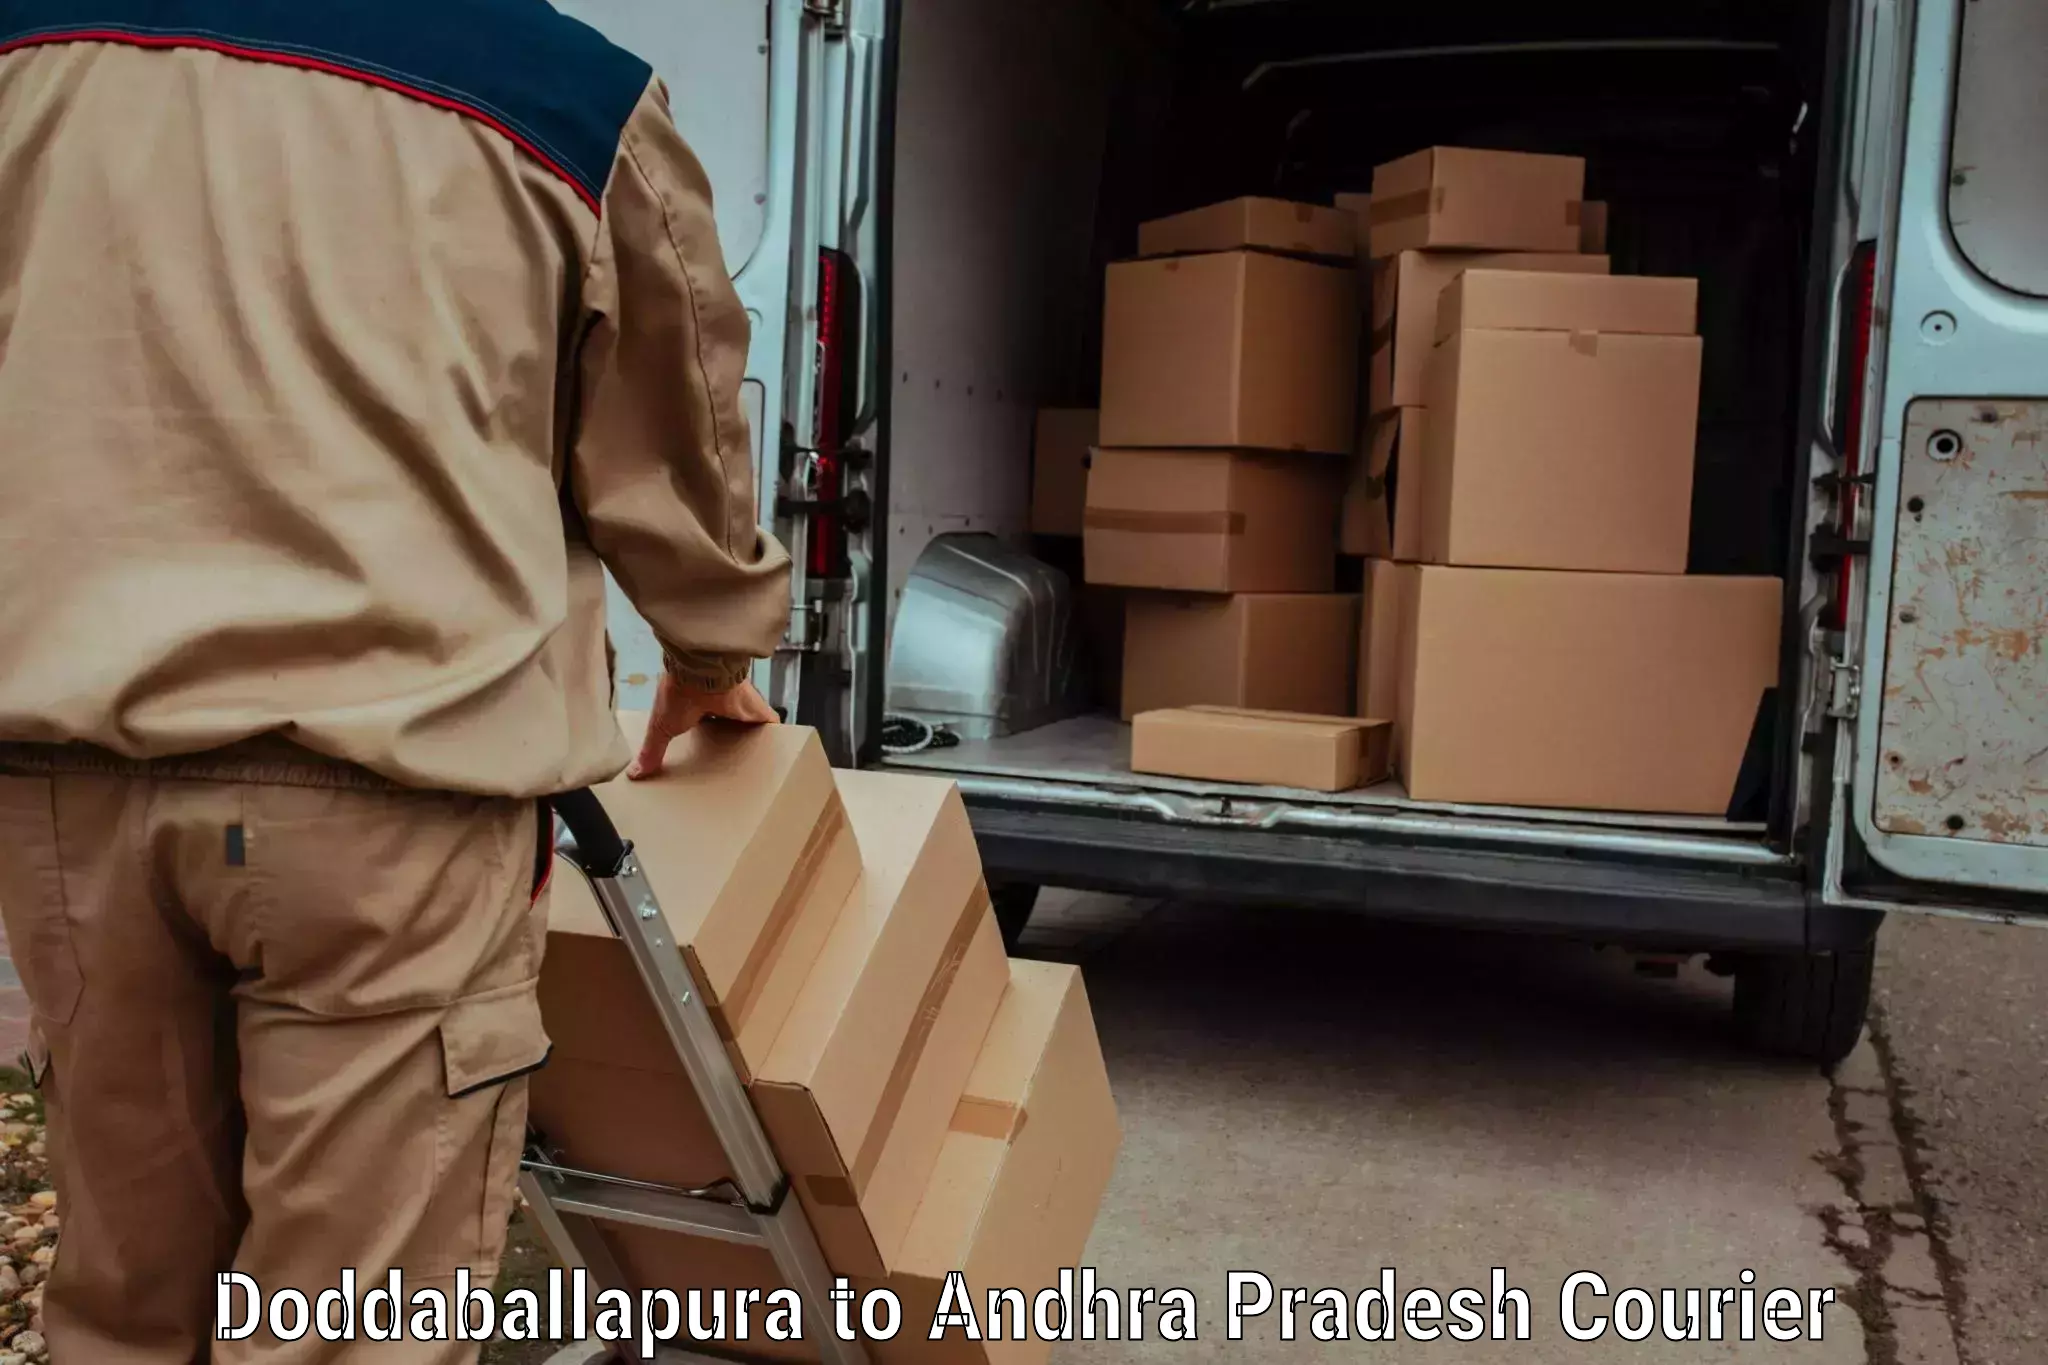 Lightweight parcel options Doddaballapura to Kotturu Srikakulam